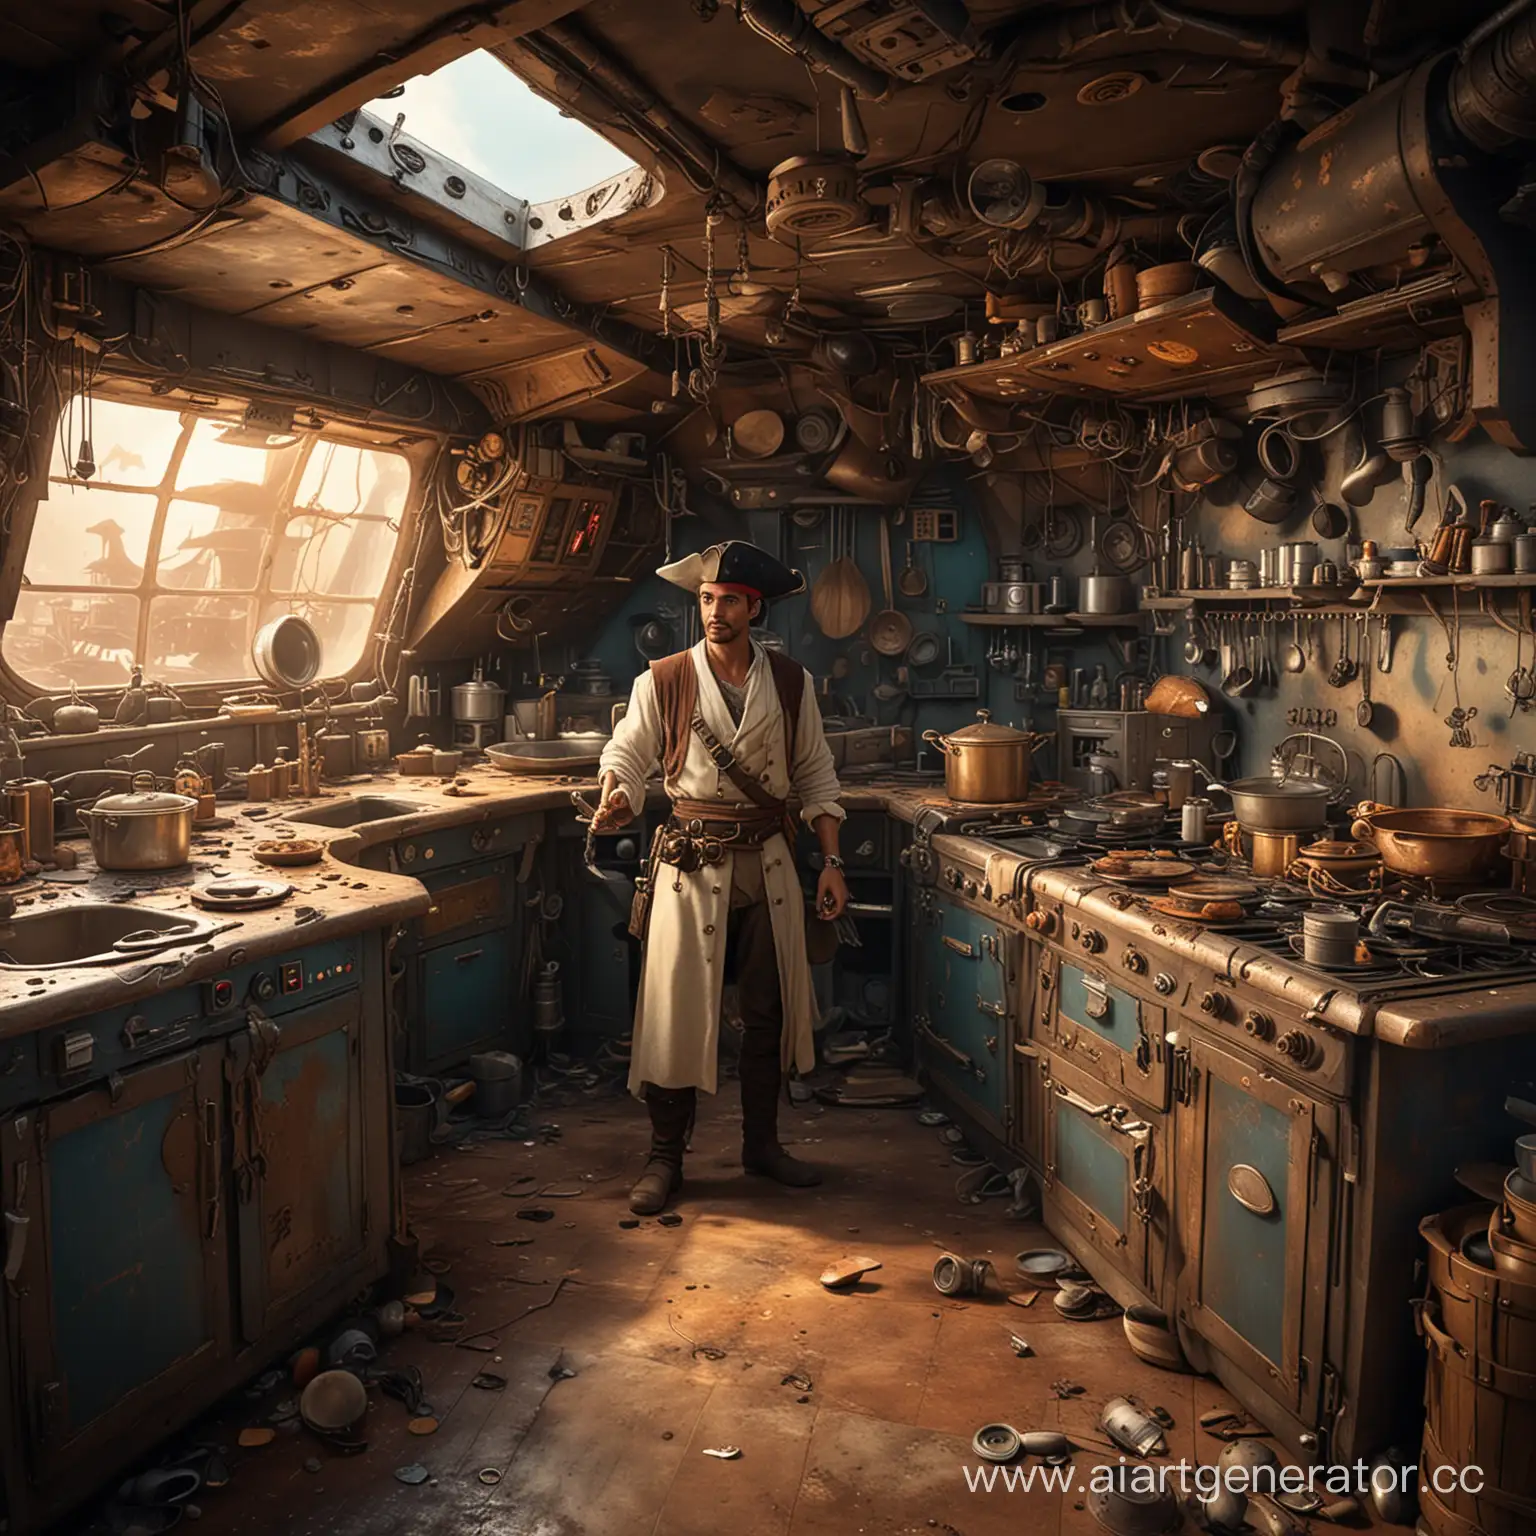 Futuristic-Pirate-Ship-Kitchen-Scene-with-Prosthetic-Cook